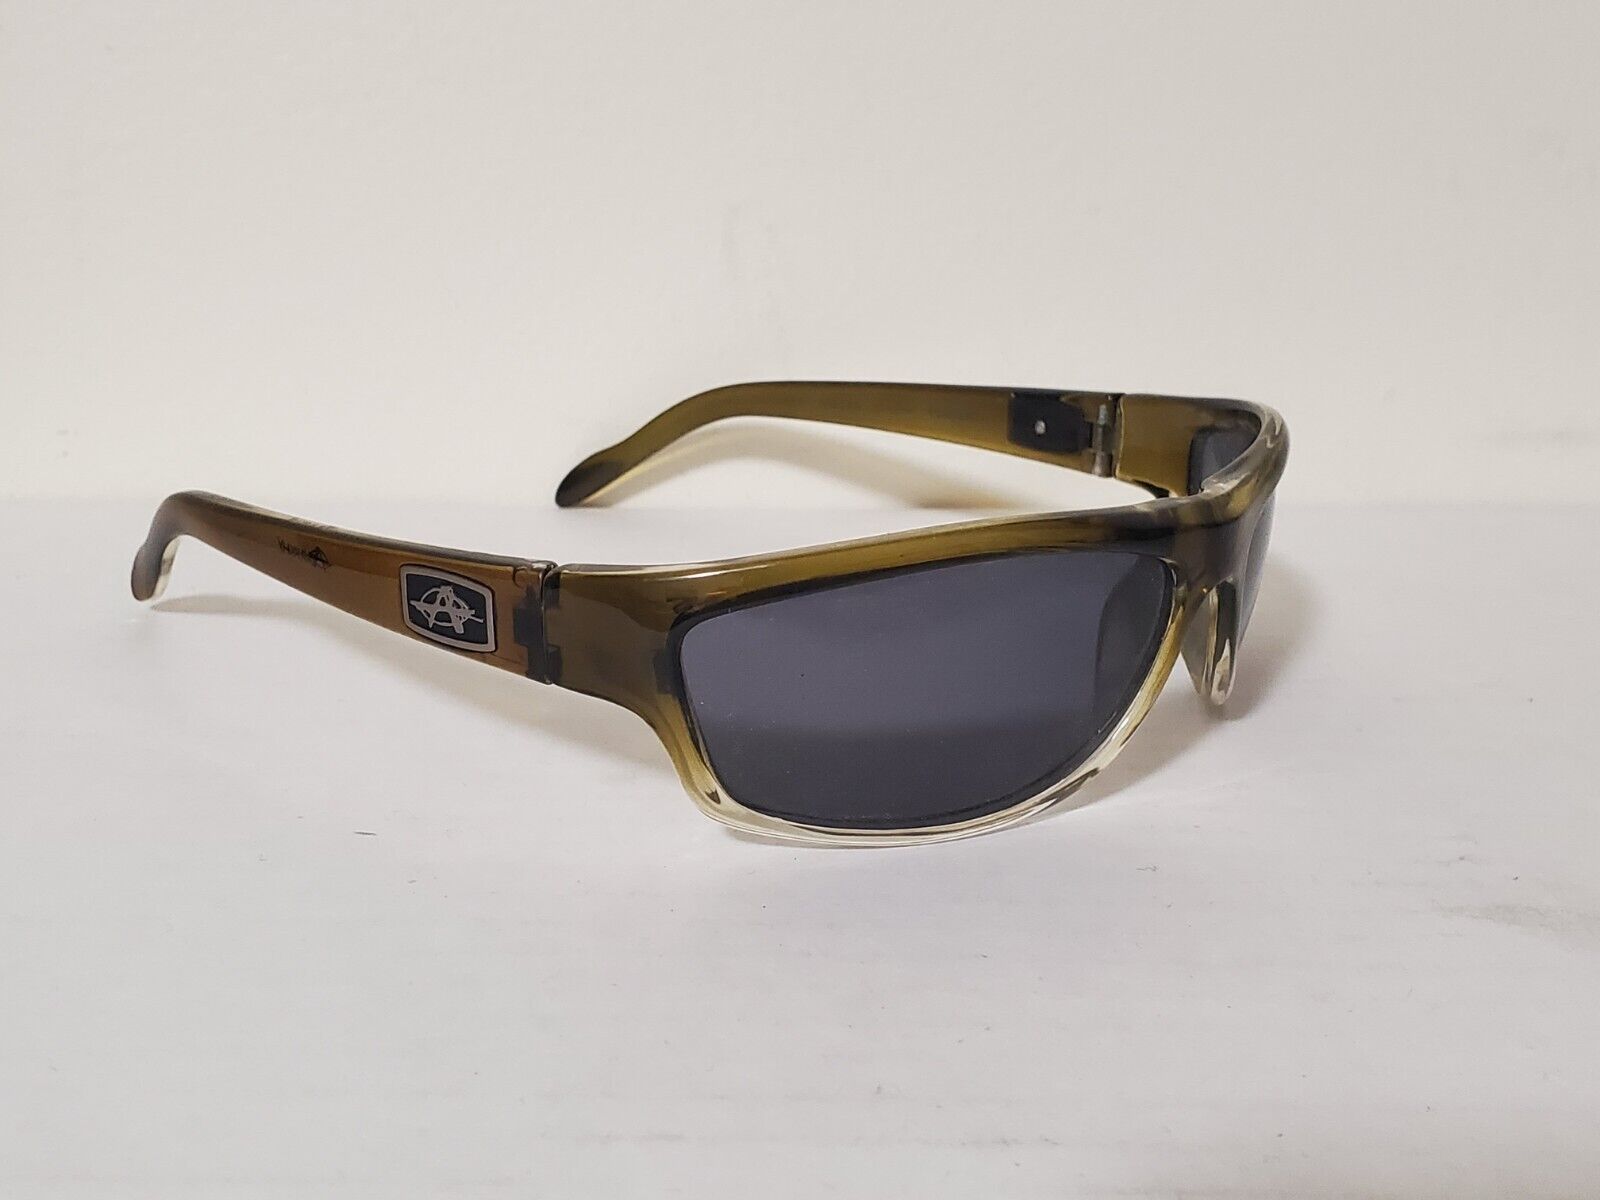 Anarchy Sunglasses Bedlam Olive Fade Polarized OAN3311 Dark Lenses Sports Wrap